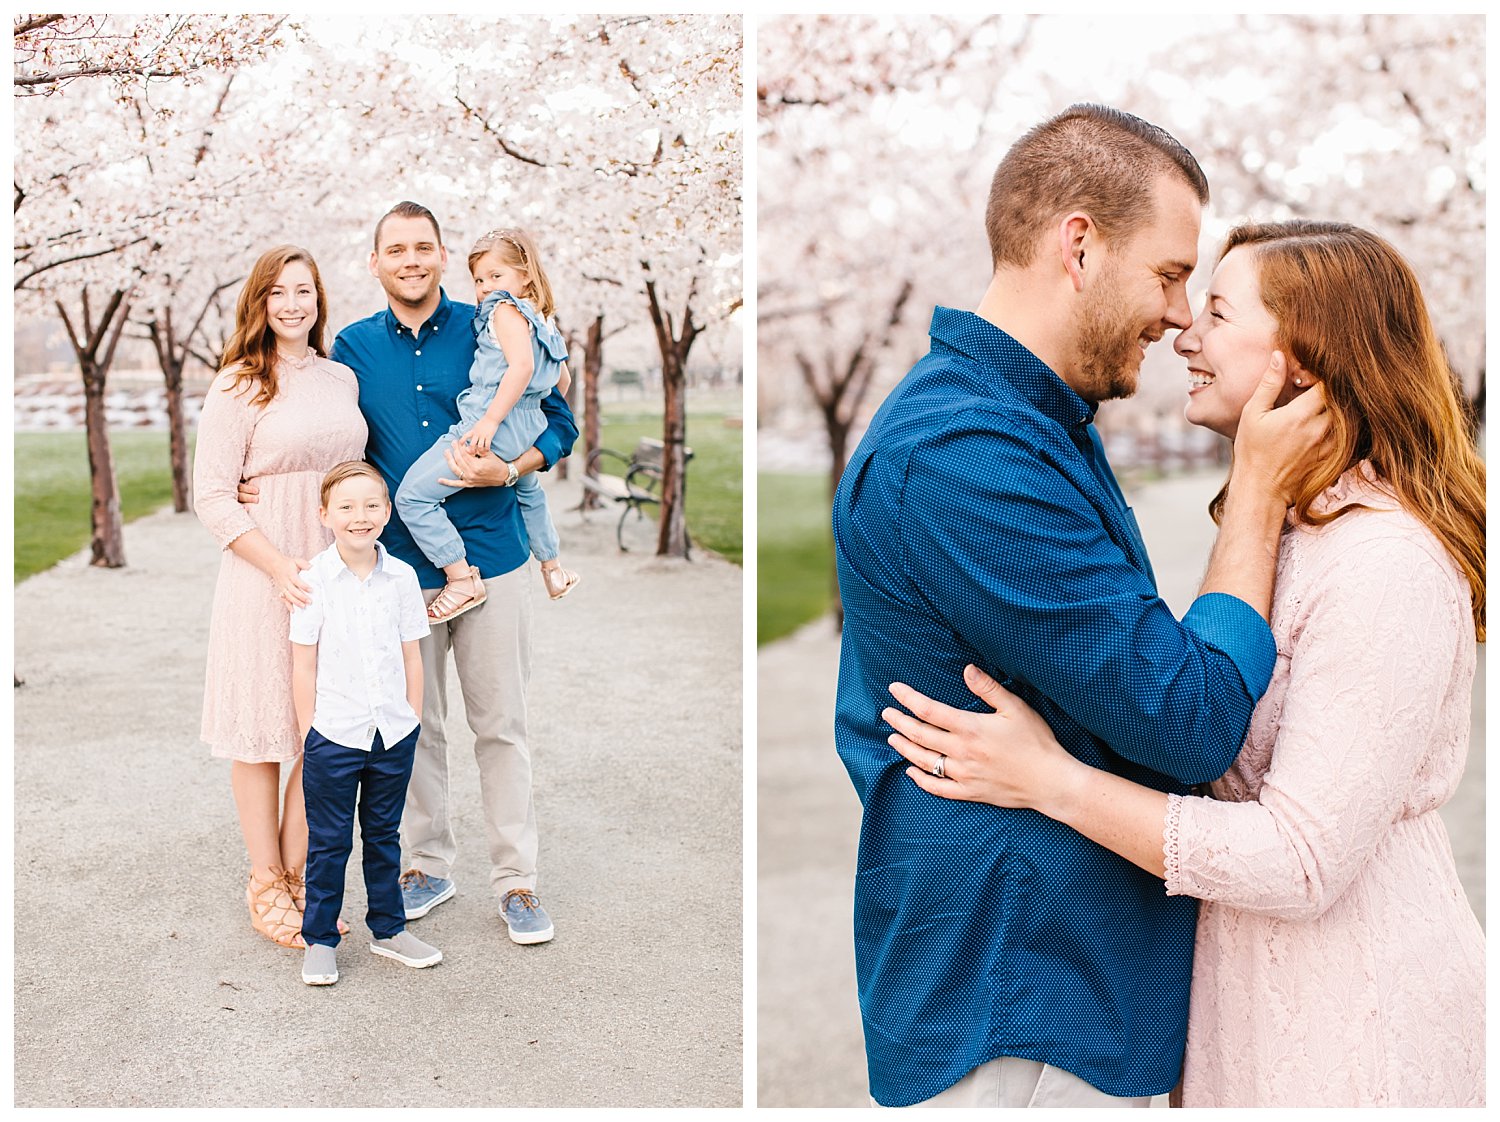 spring blossoms family portrait session